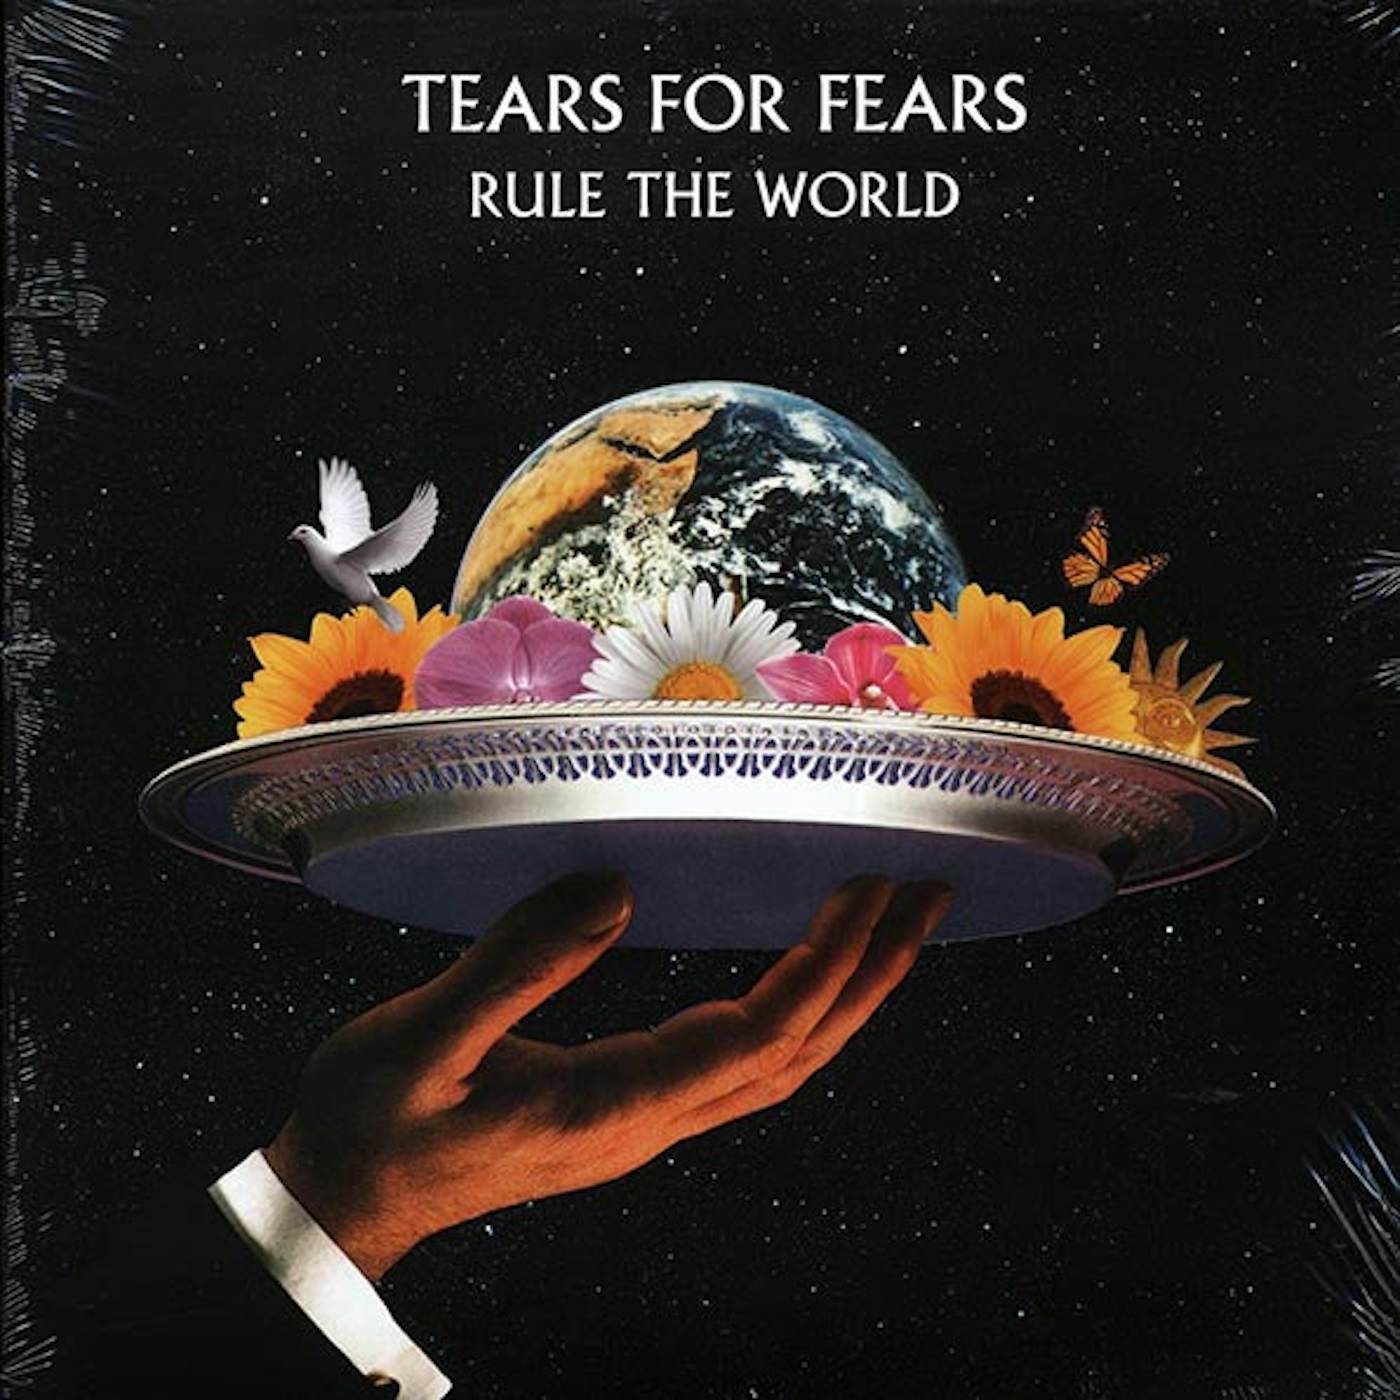 Tears for Fears Tour 2022 – Tears for Fears Travel Fans